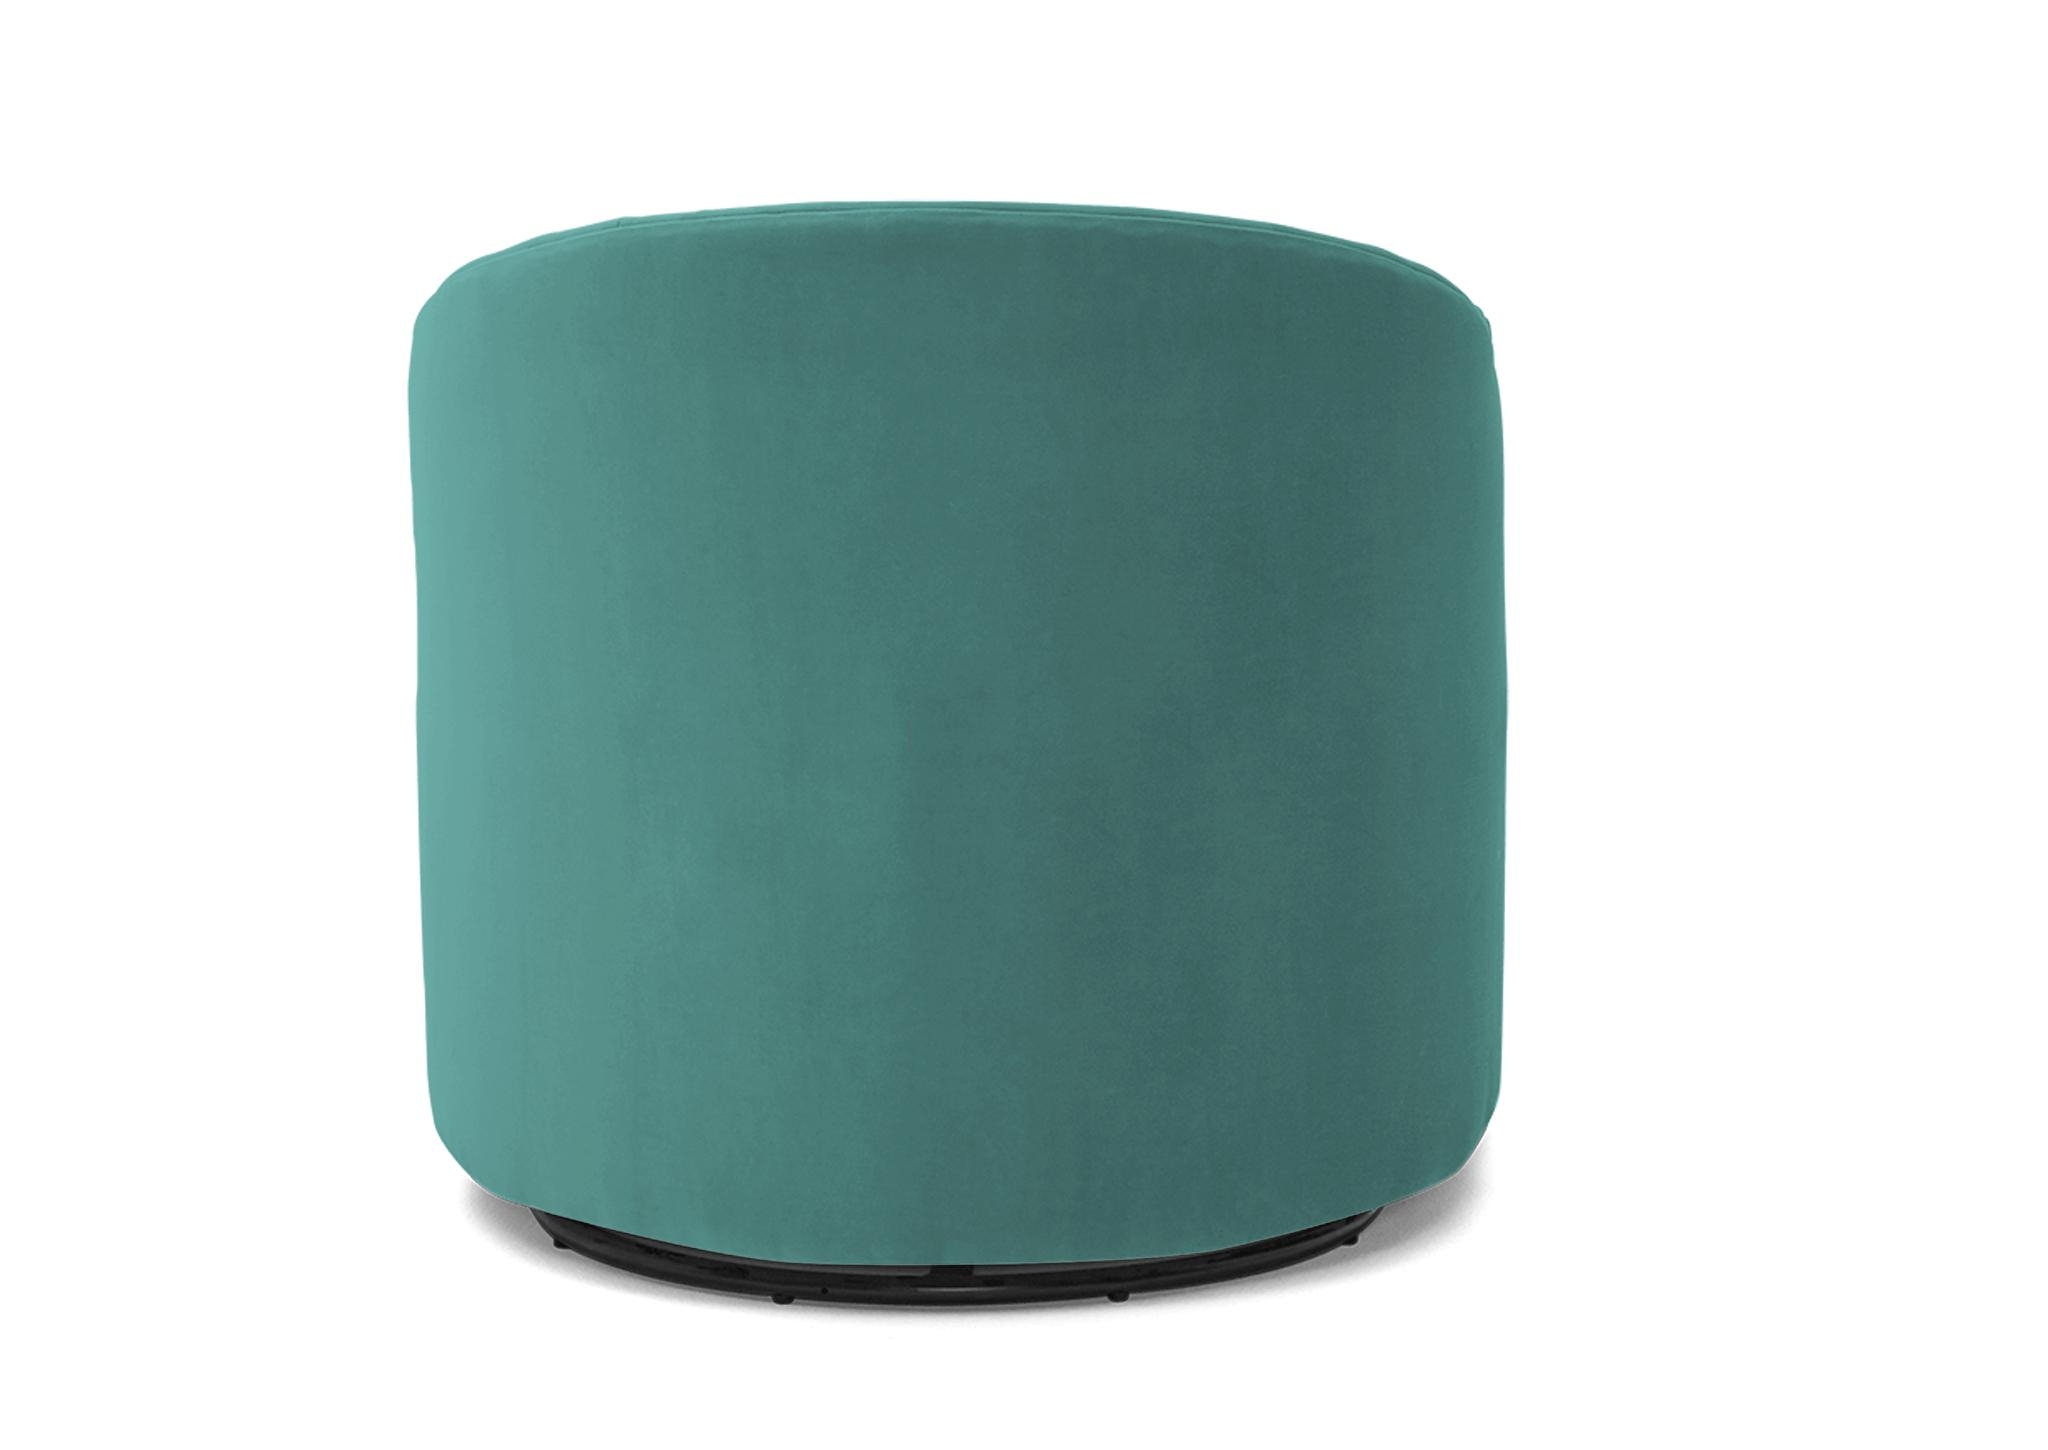 Green Jolie Mid Century Modern Swivel Chair - Essence Aqua - Image 4